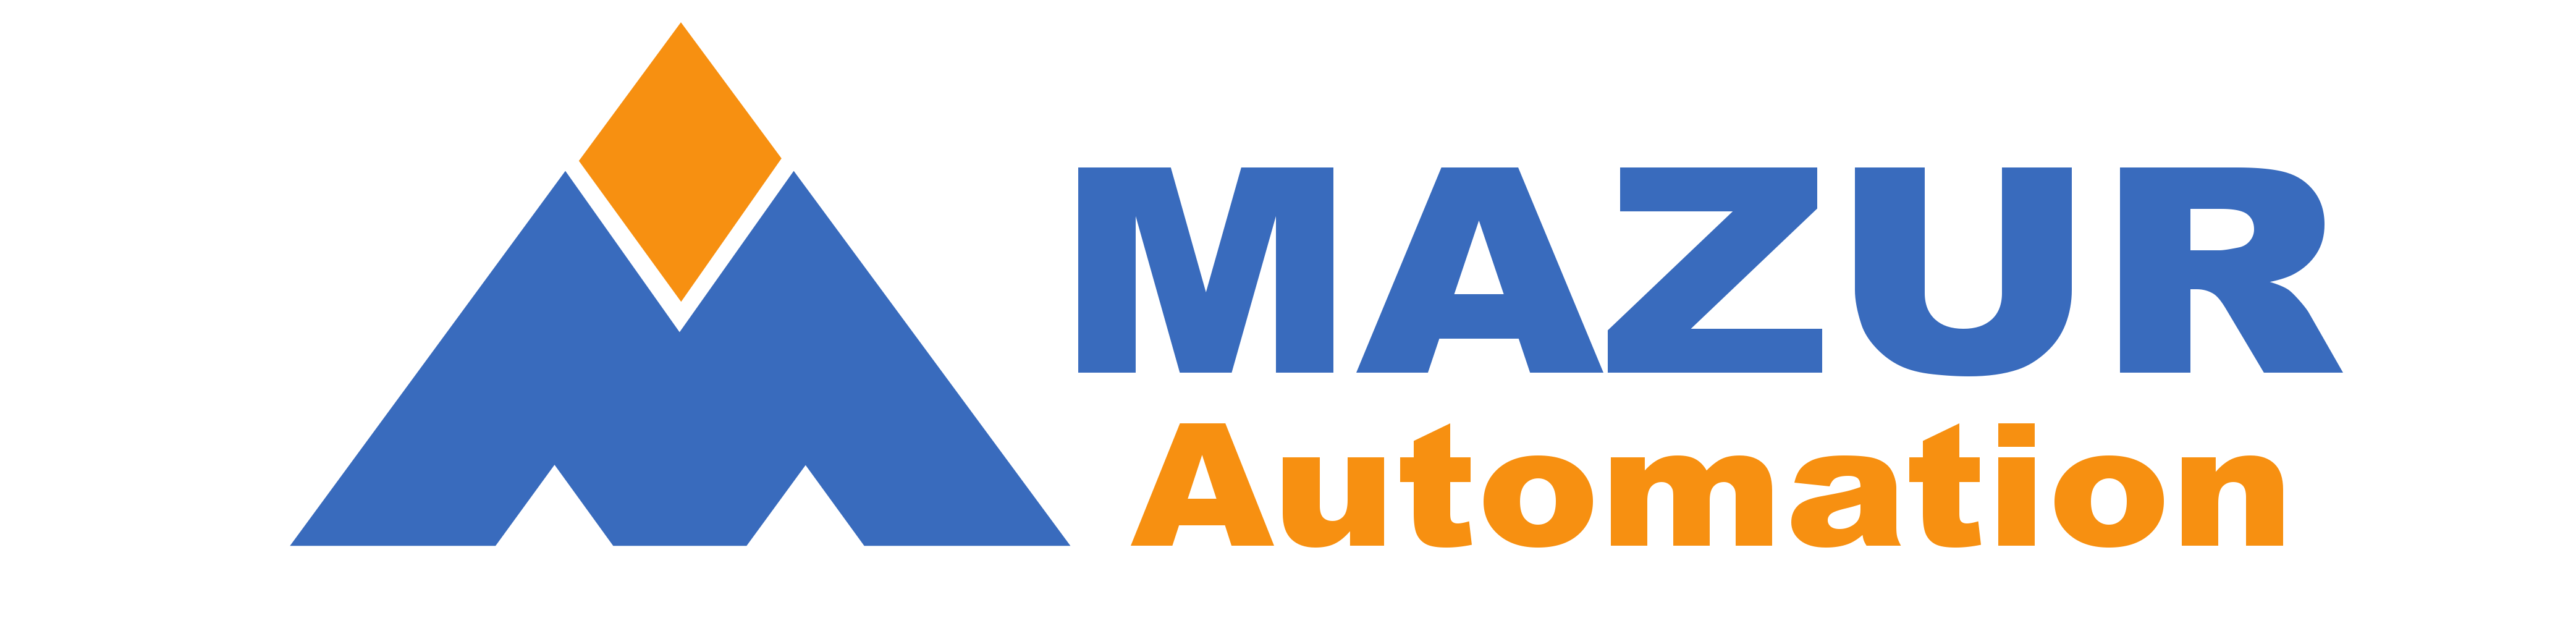 Mazur Automation